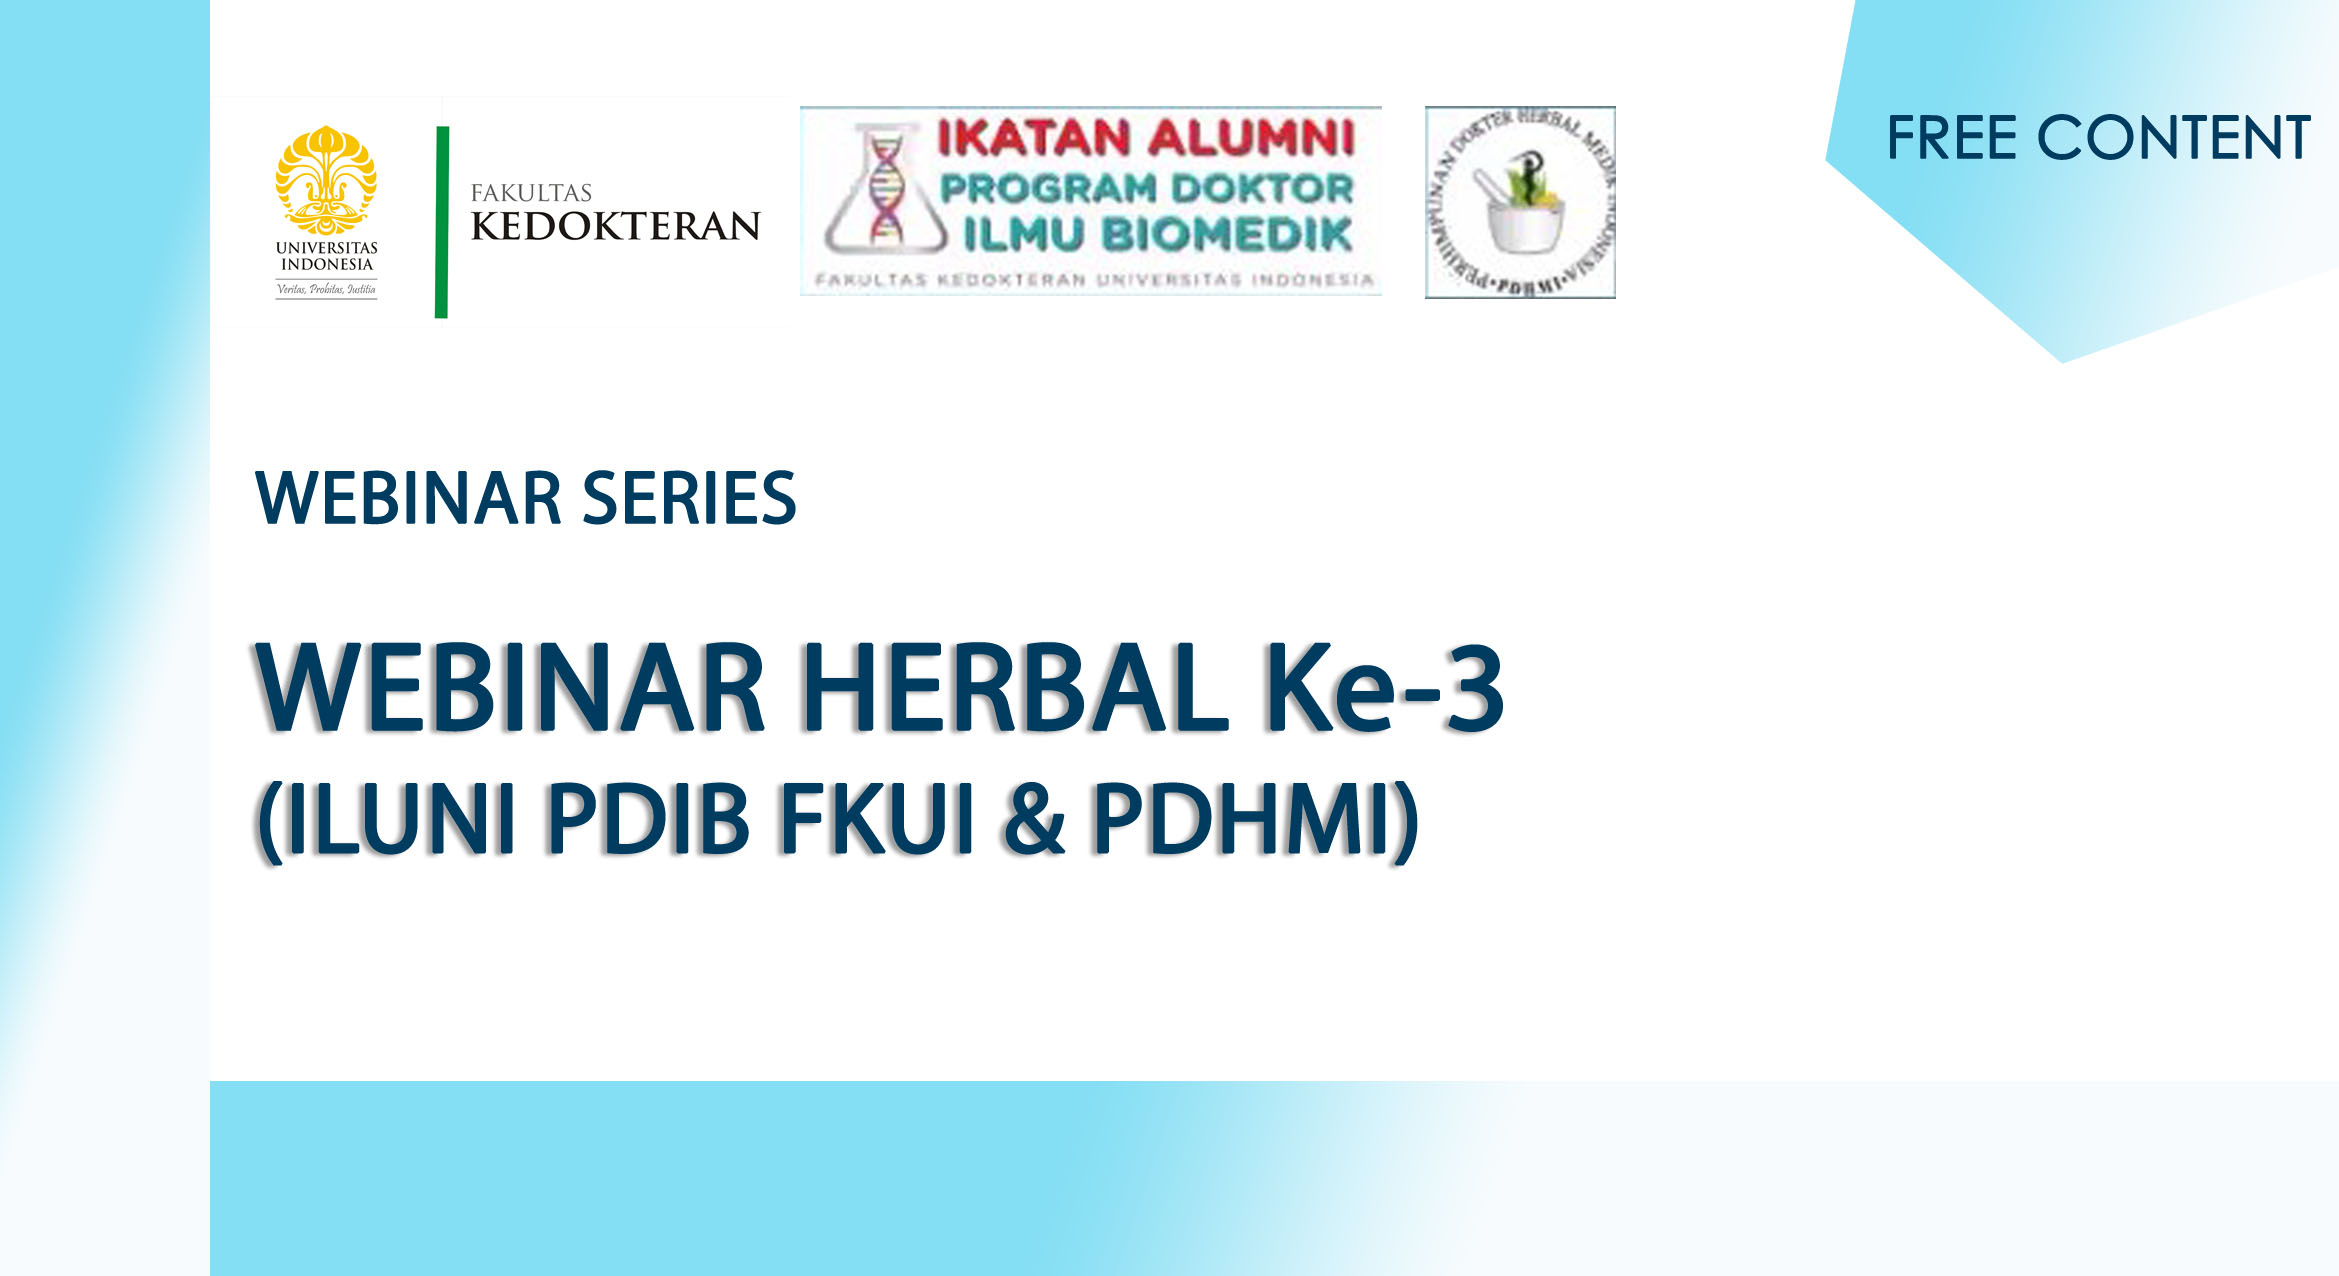 Course Image Webinar Herbal Series Ke-3 ILUNI PDIB & PDHMI Special Update COVID-19